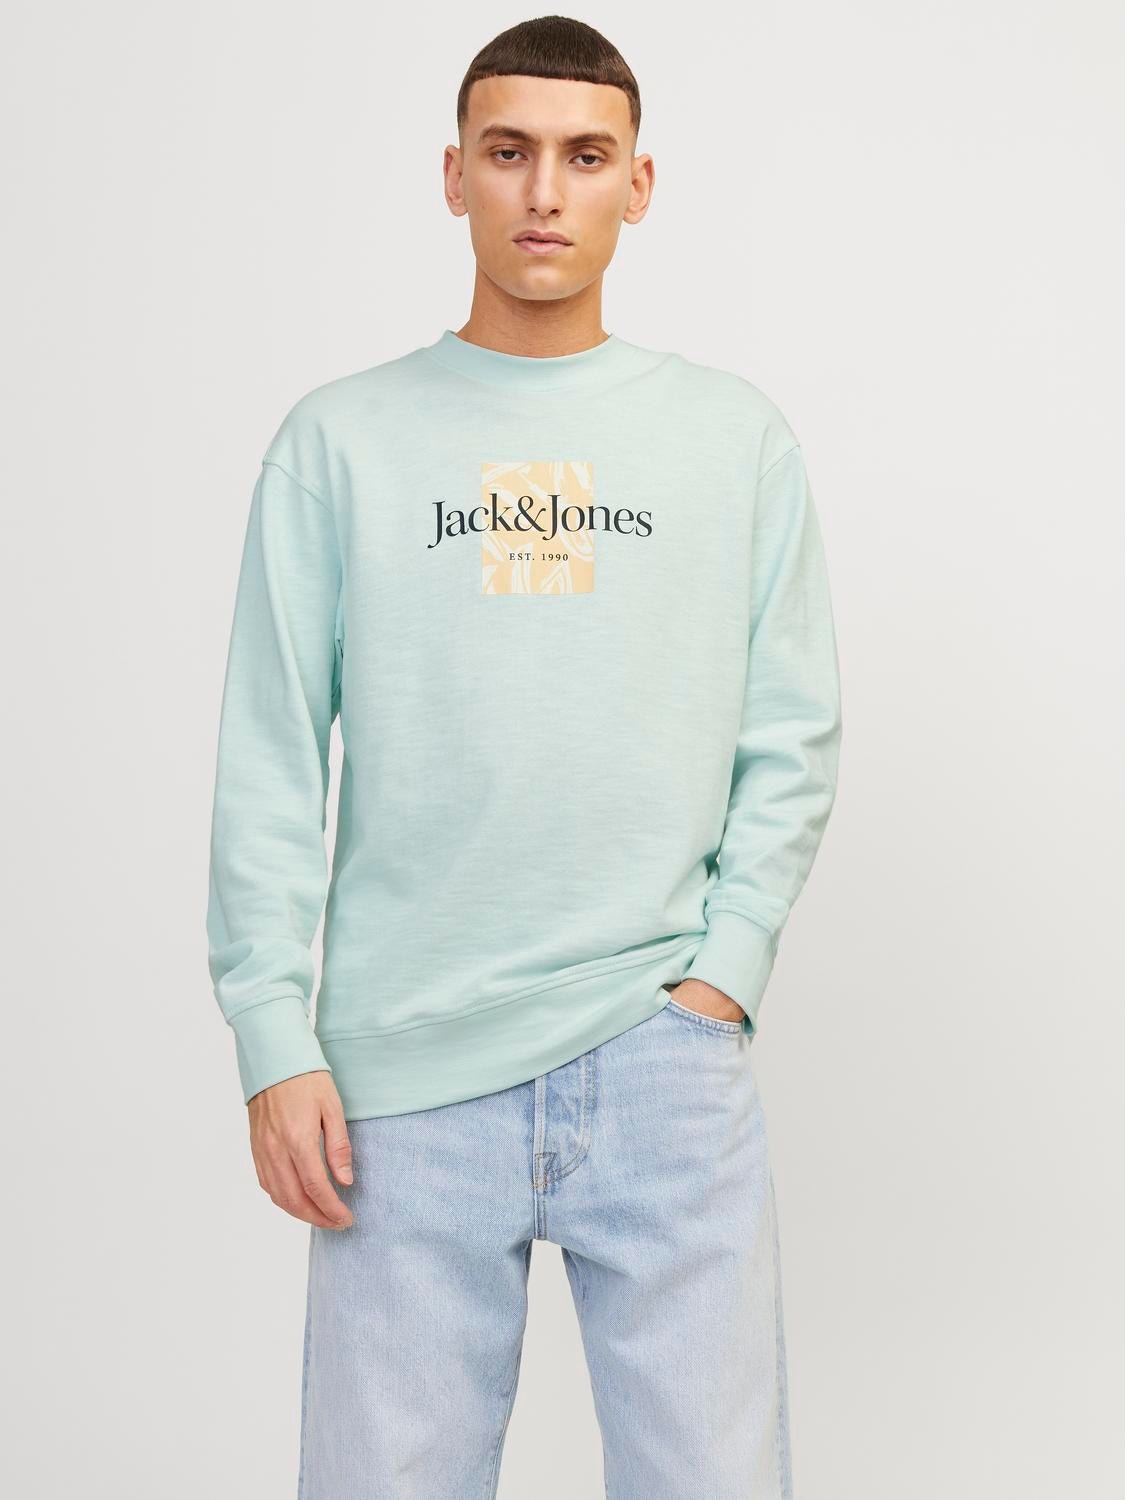 Jack & Jones Printed Crewn Neck Sweatshirt -Skylight - 12253652